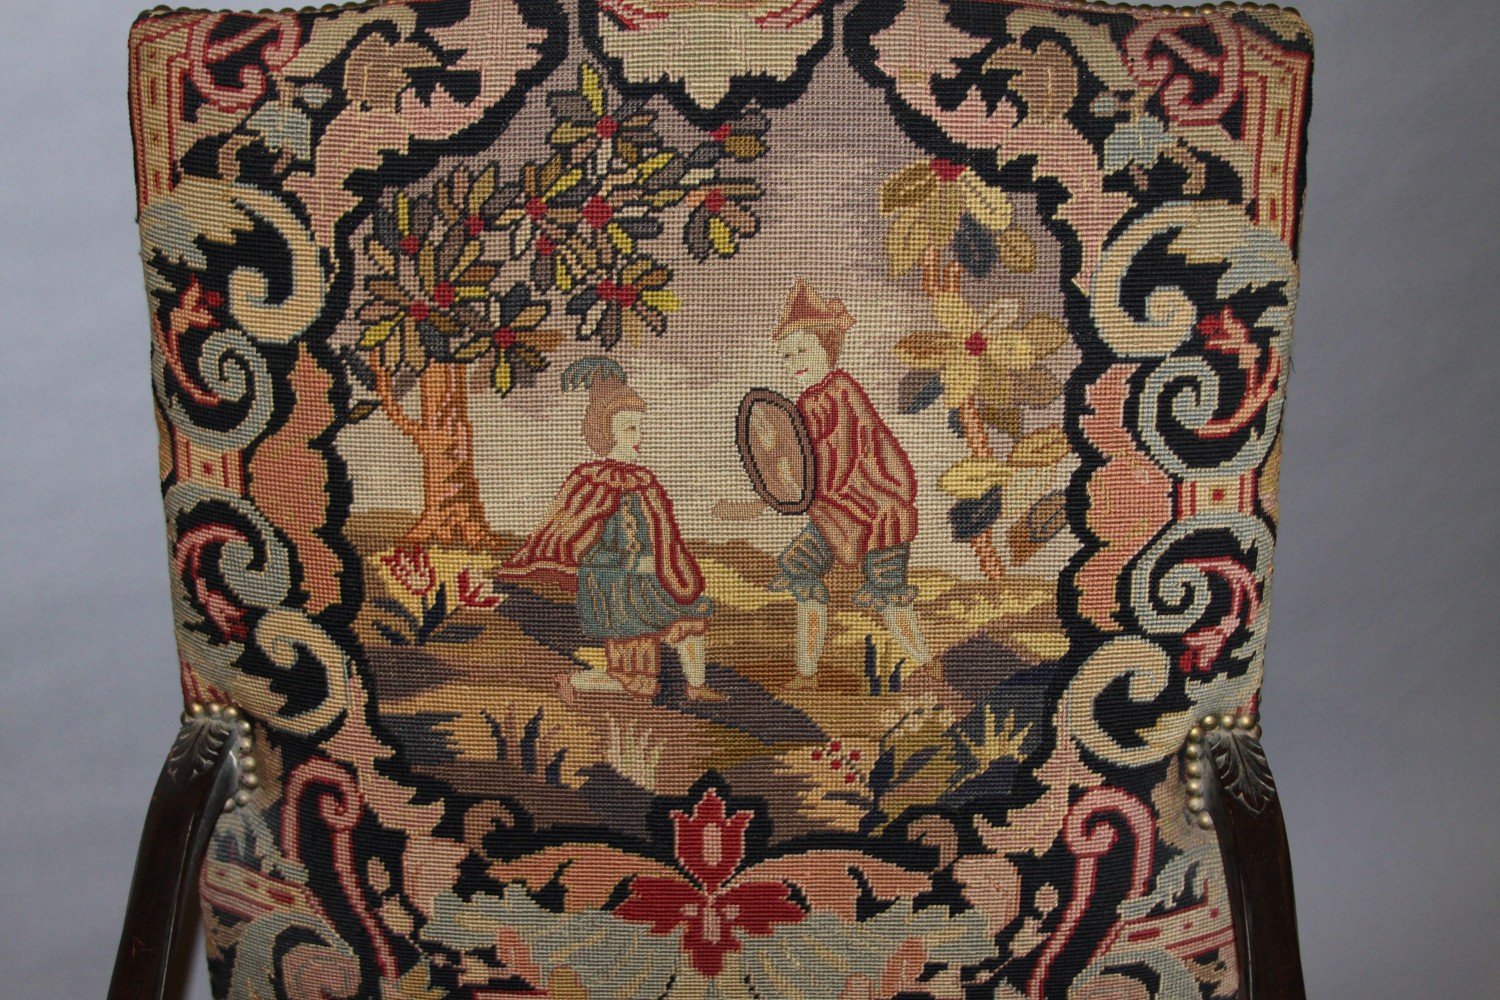 Decorative Arts: A Regency Style Armchair, 19th century